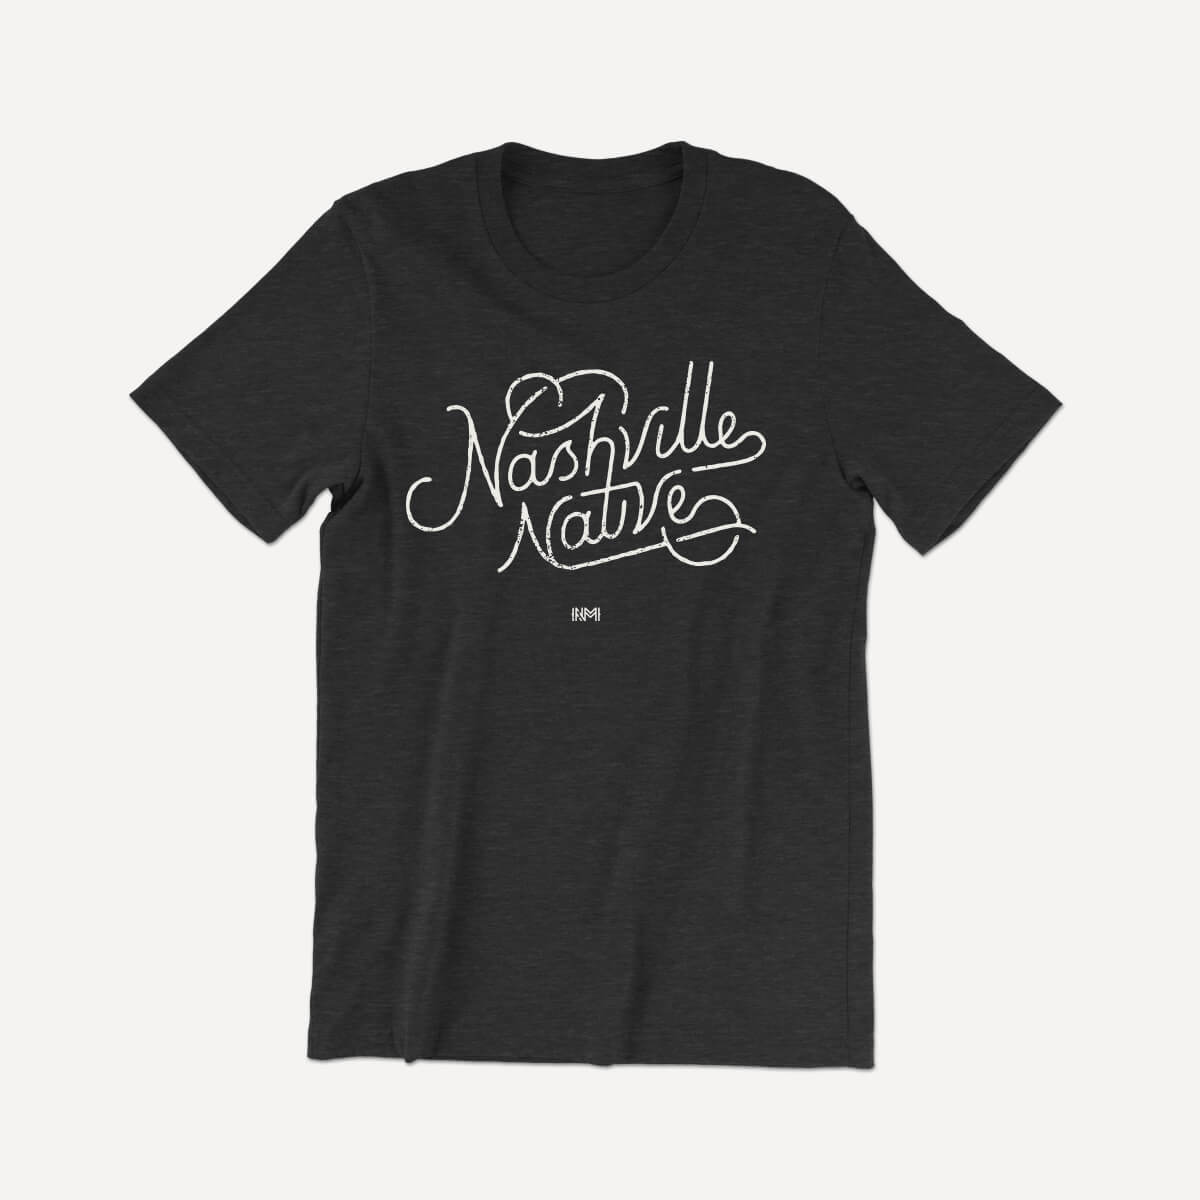 Nashville Native T-shirt in Heather black